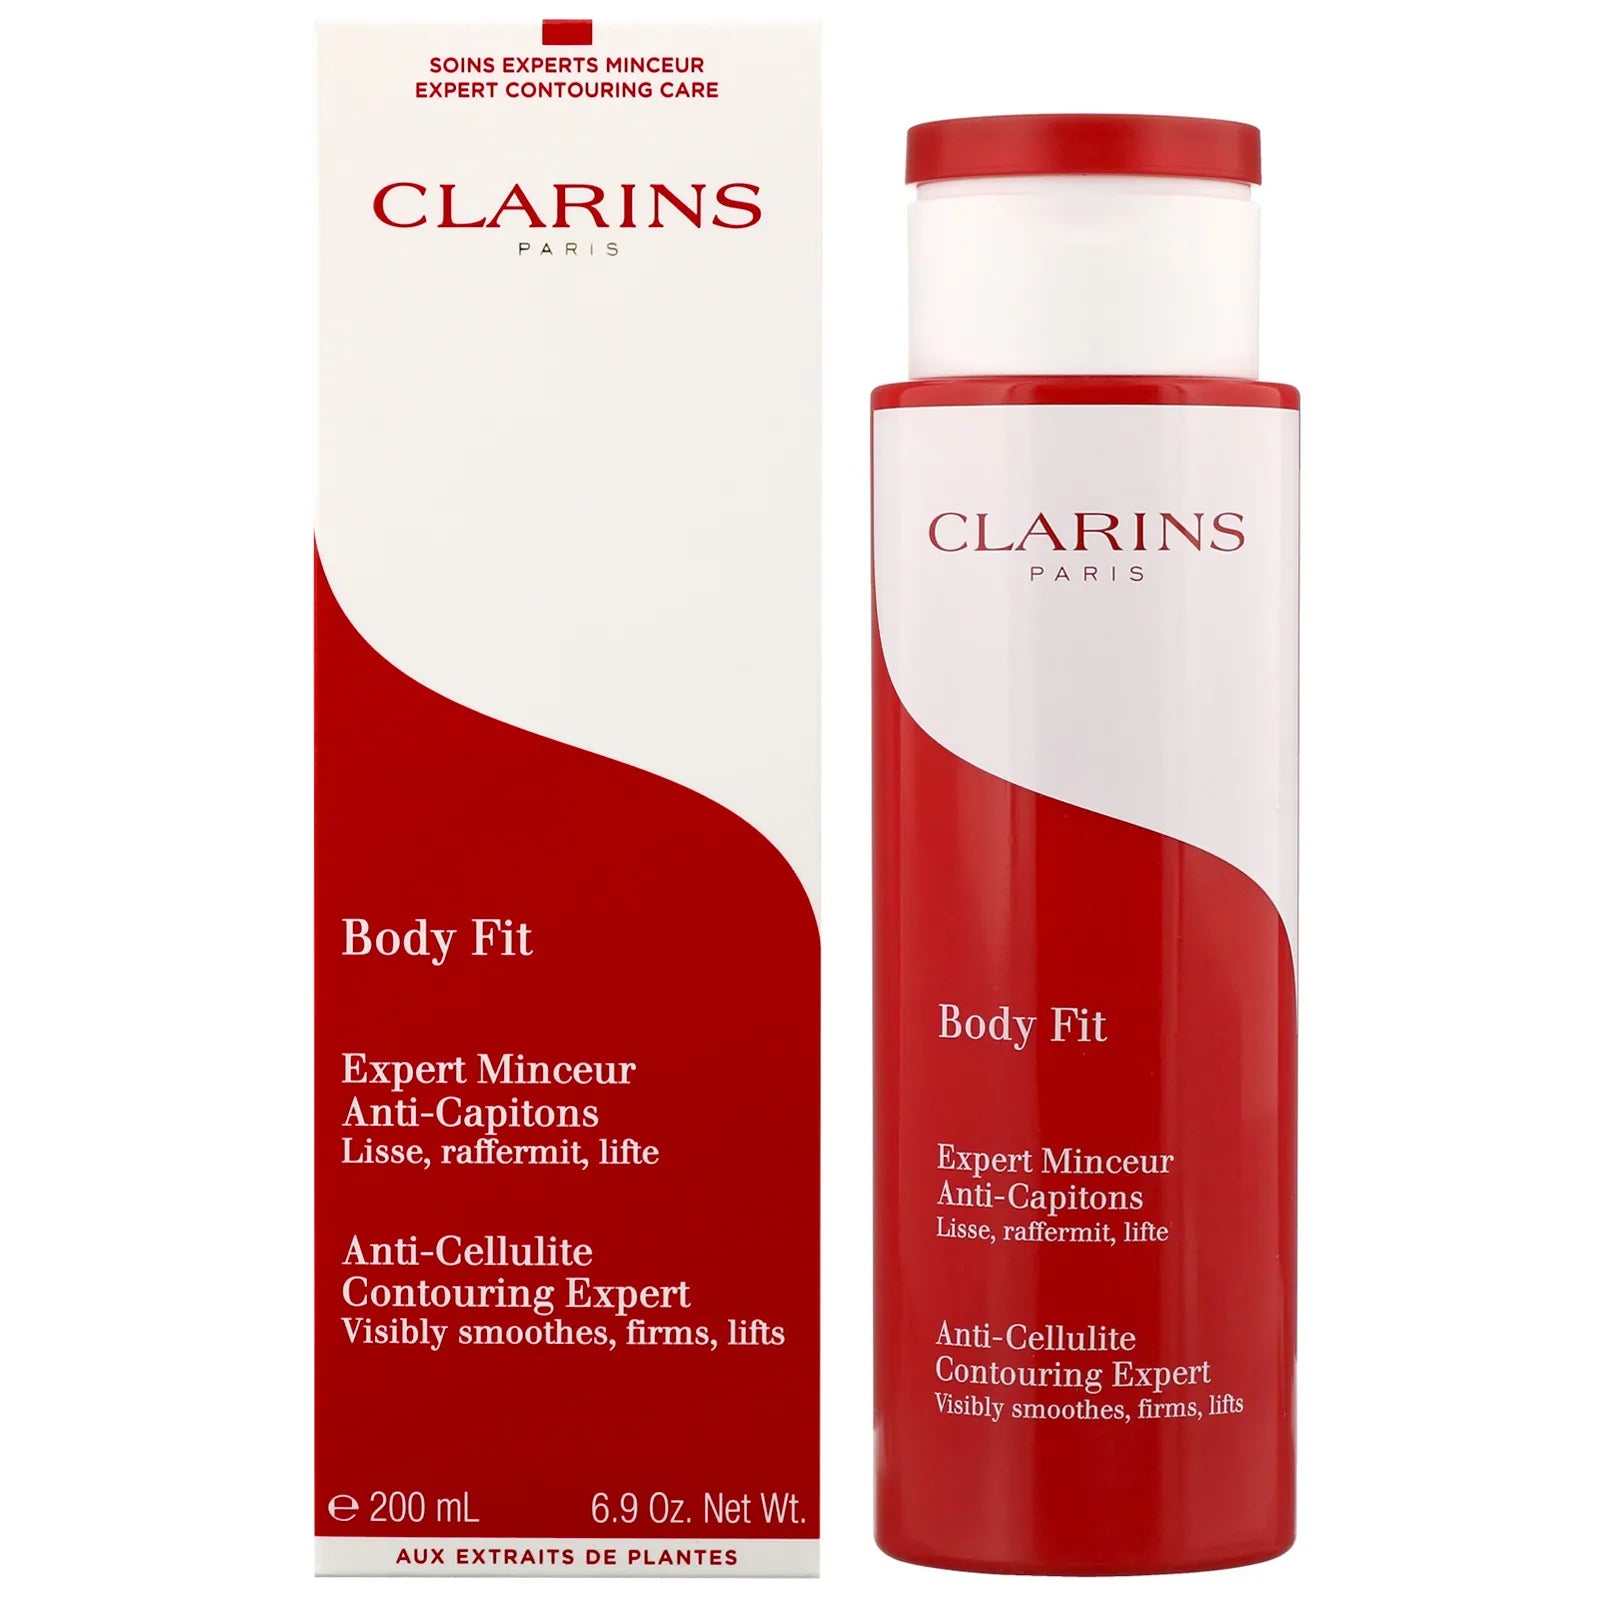 Clarins Body Fit Anti-Cellulite Contouring Expert 6.9oz, 200ml